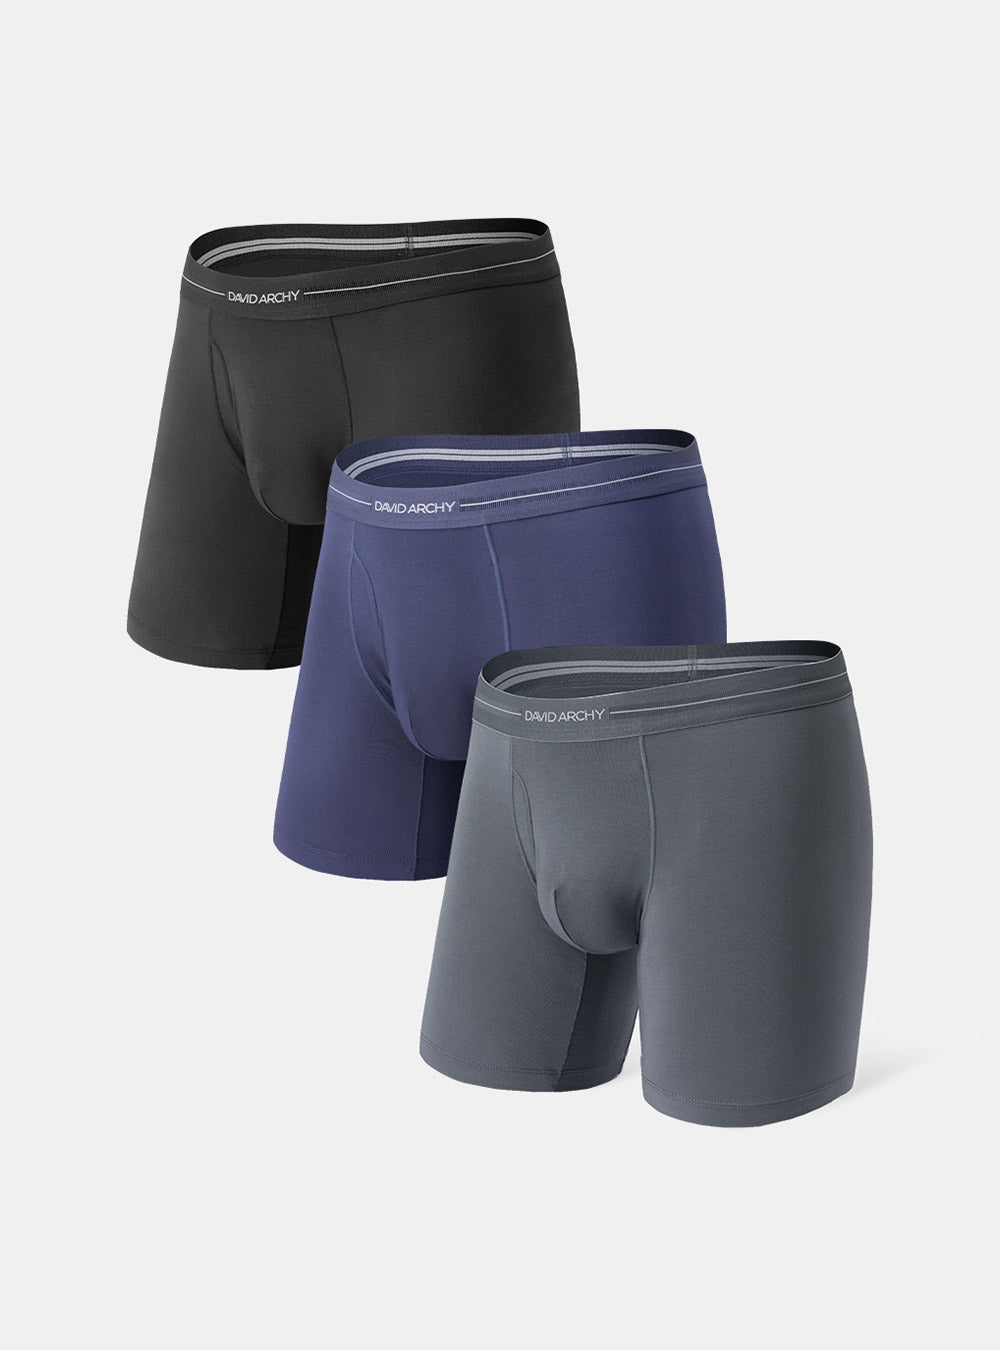 DAVID ARCHY Men's Underwear Ultra Soft Micro Modal Moisture